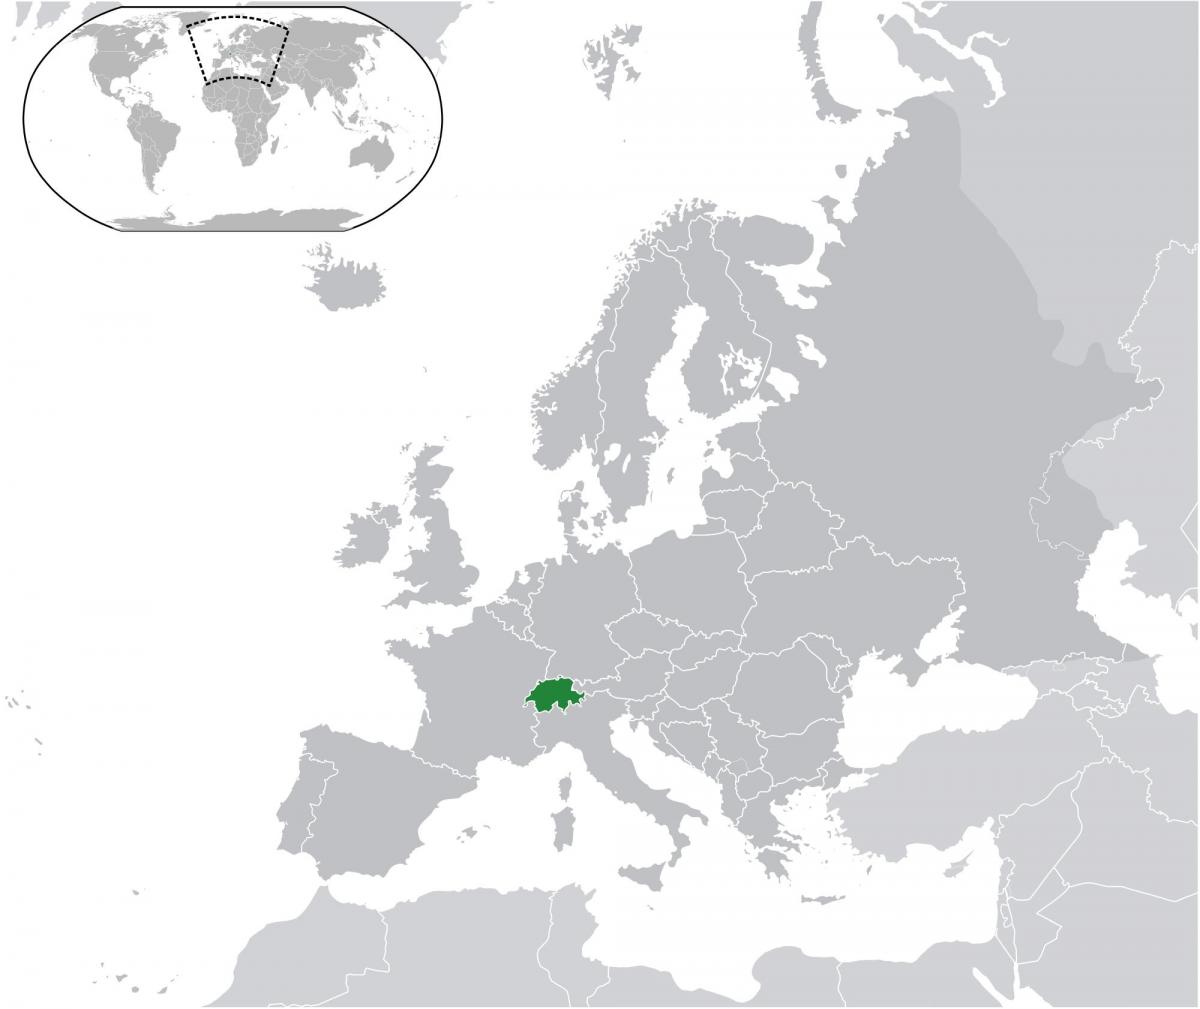 suïssa mapa del món